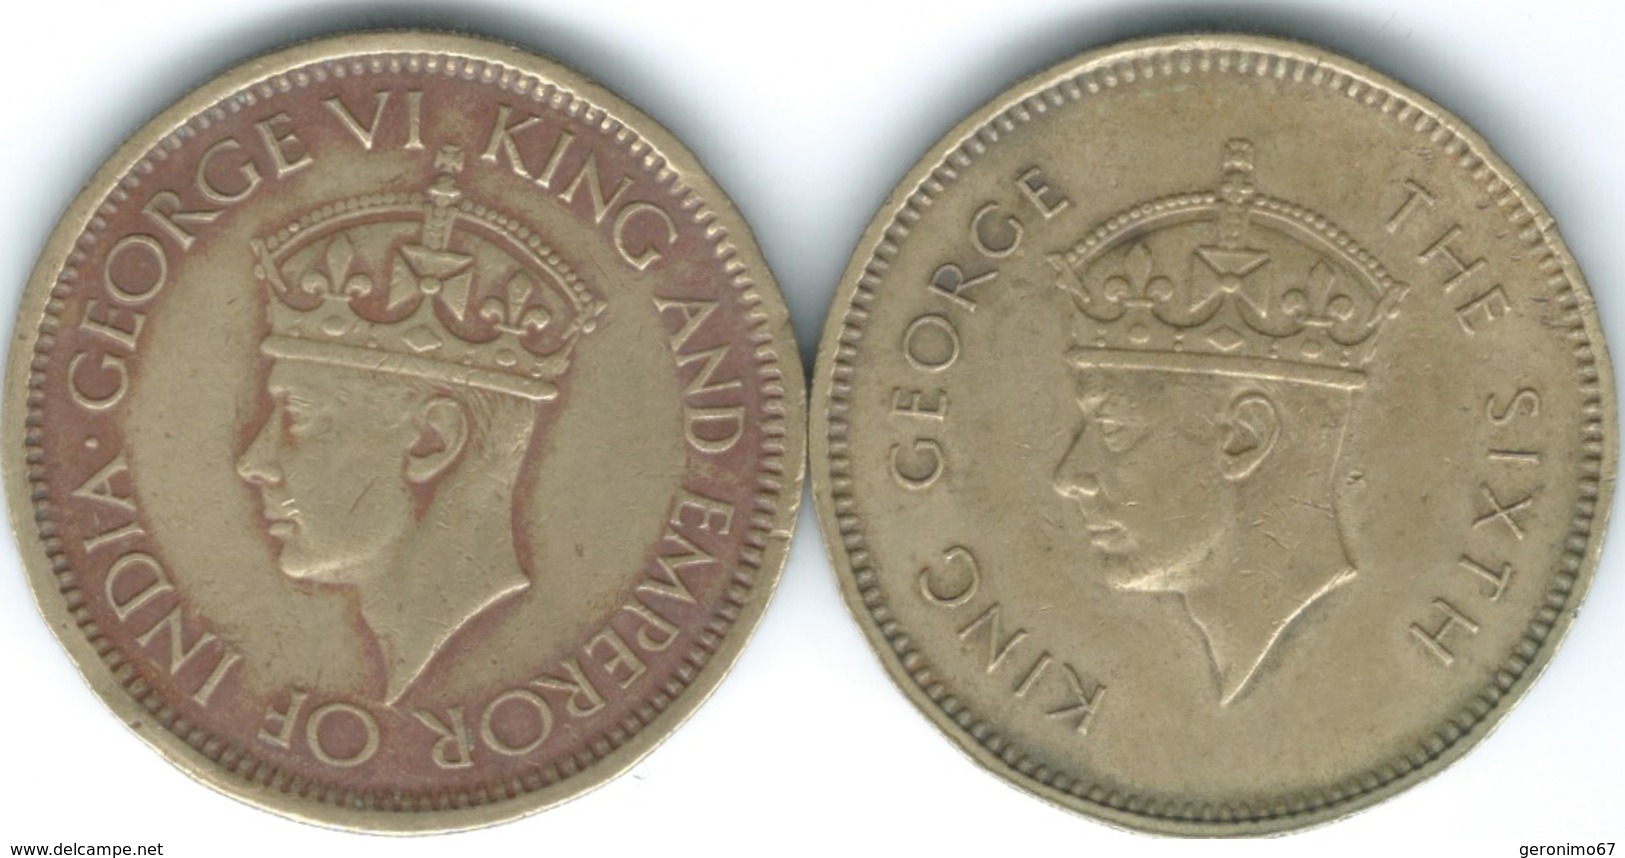 Ceylon - George VI - 1943 - 50 Cents - KM116 & 1951 - KM123 - Sri Lanka (Ceylon)